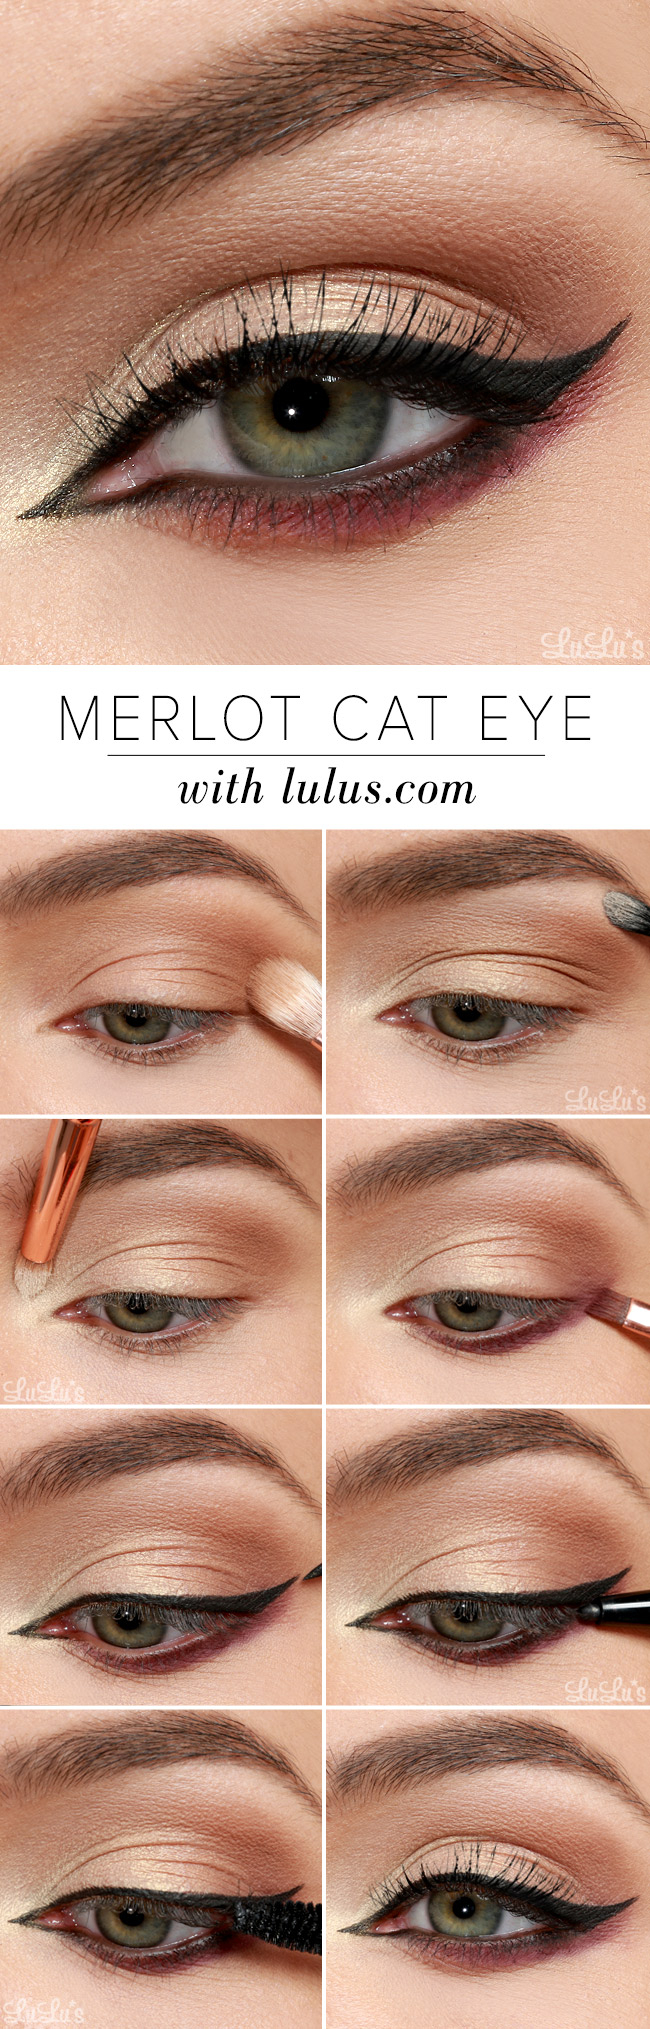 Cats Eye Makeup Lulus How To Merlot Cat Eye Makeup Tutorial Lulus Fashion Blog